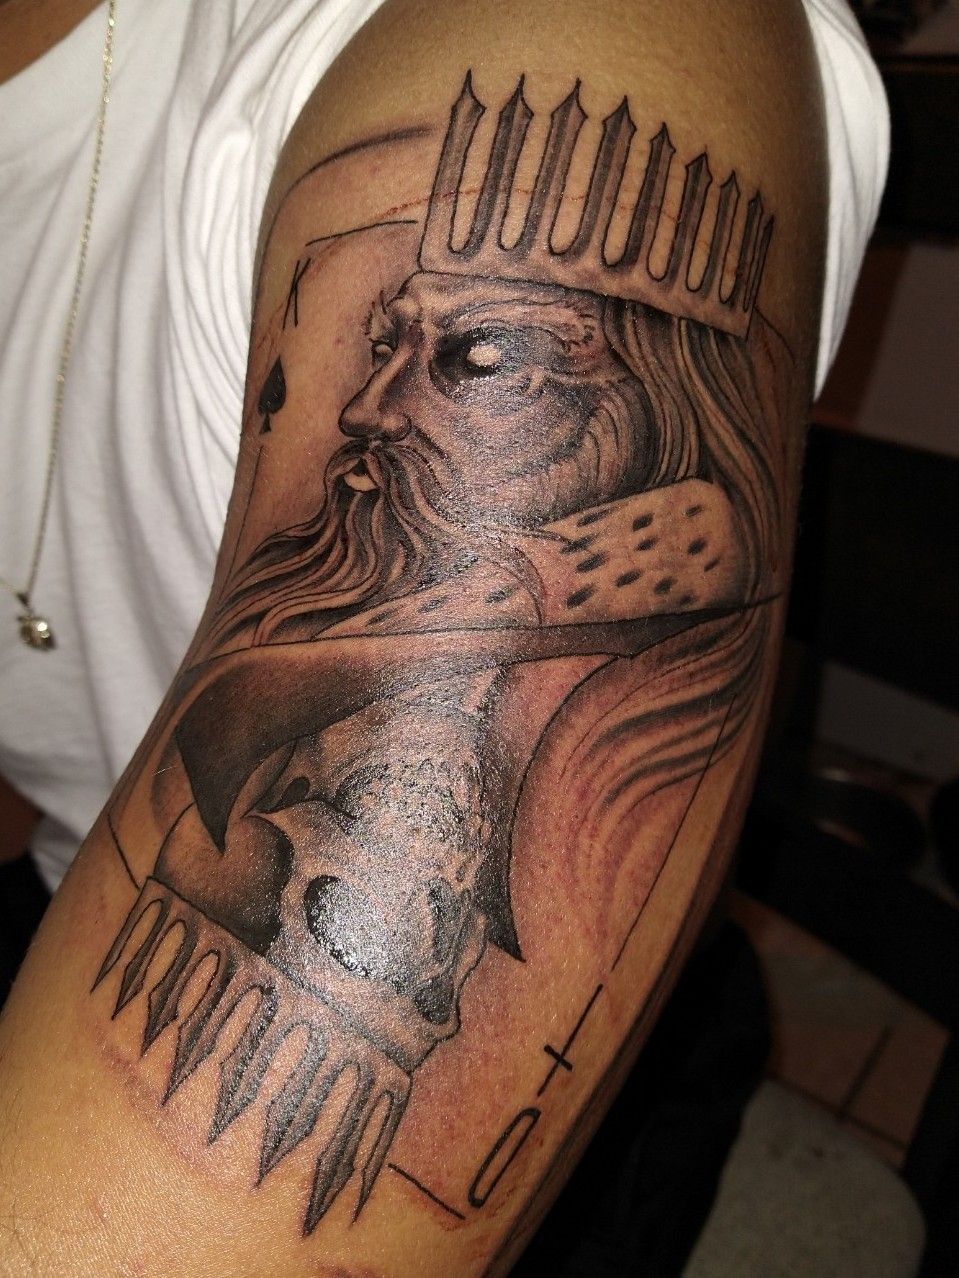 King of spades tattoo on the wrist